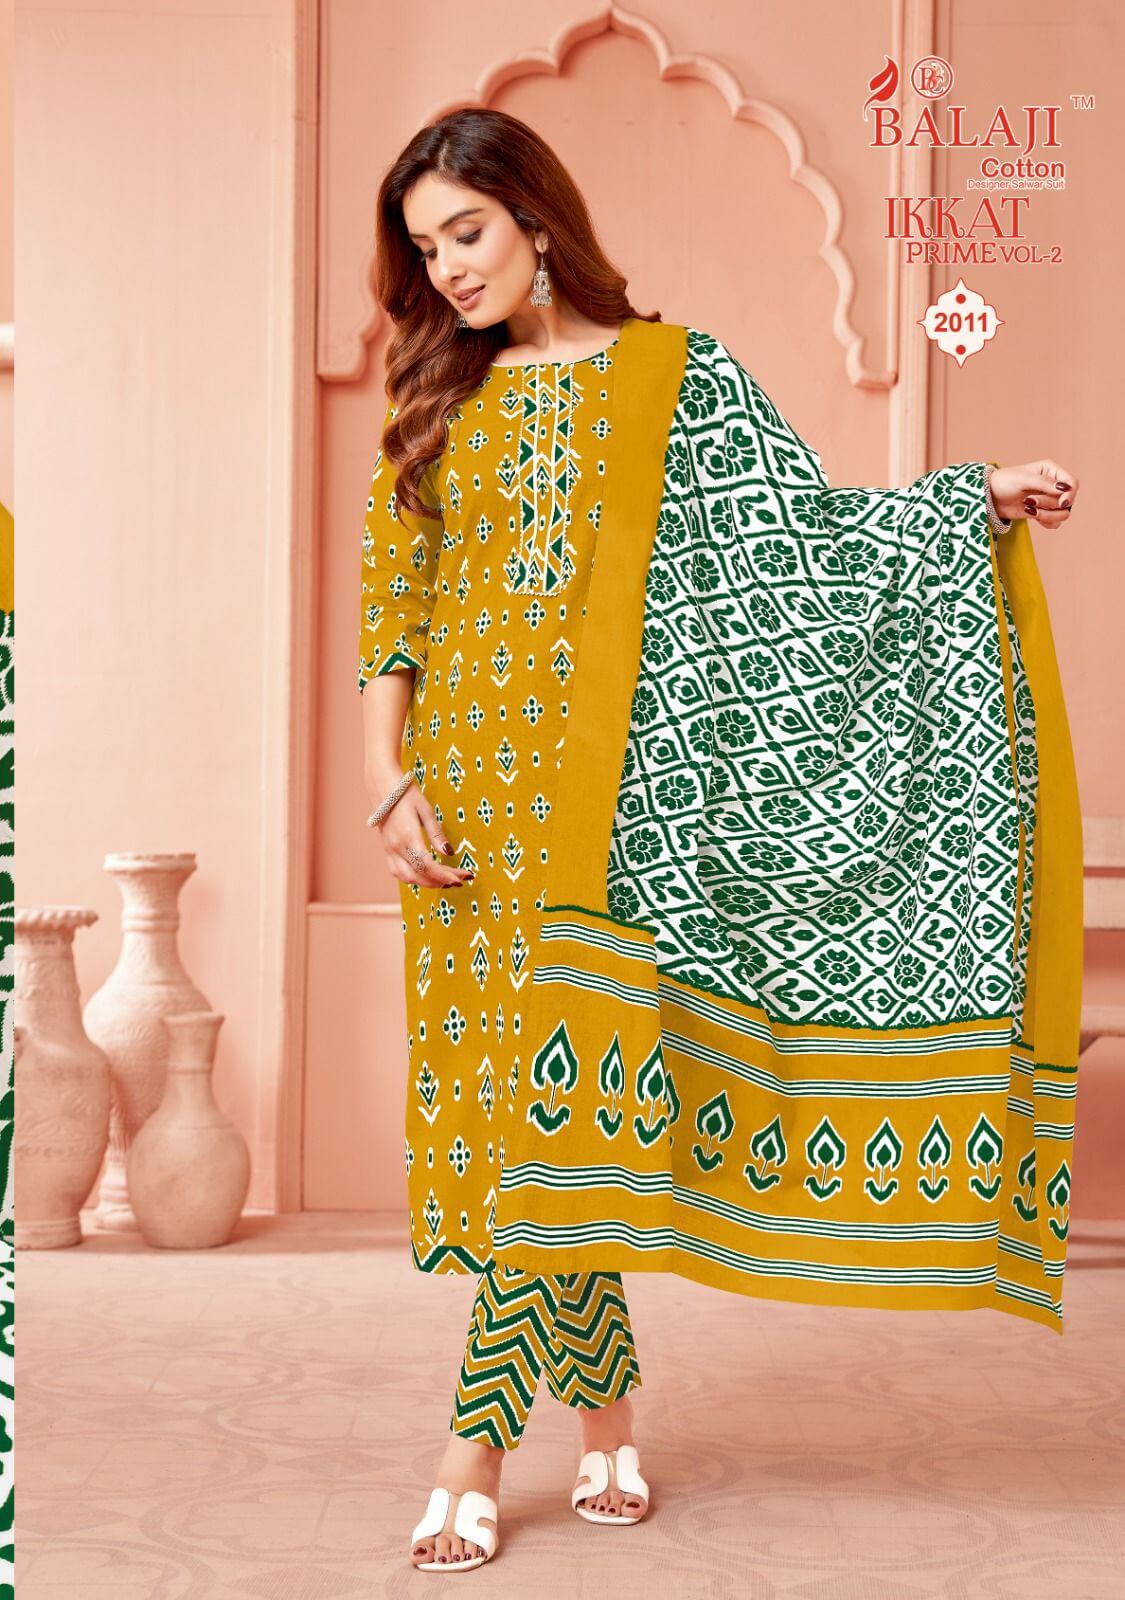 Balaji Cotton Ikkat Prime Vol 2 Readymade Dress Catalog collection 12